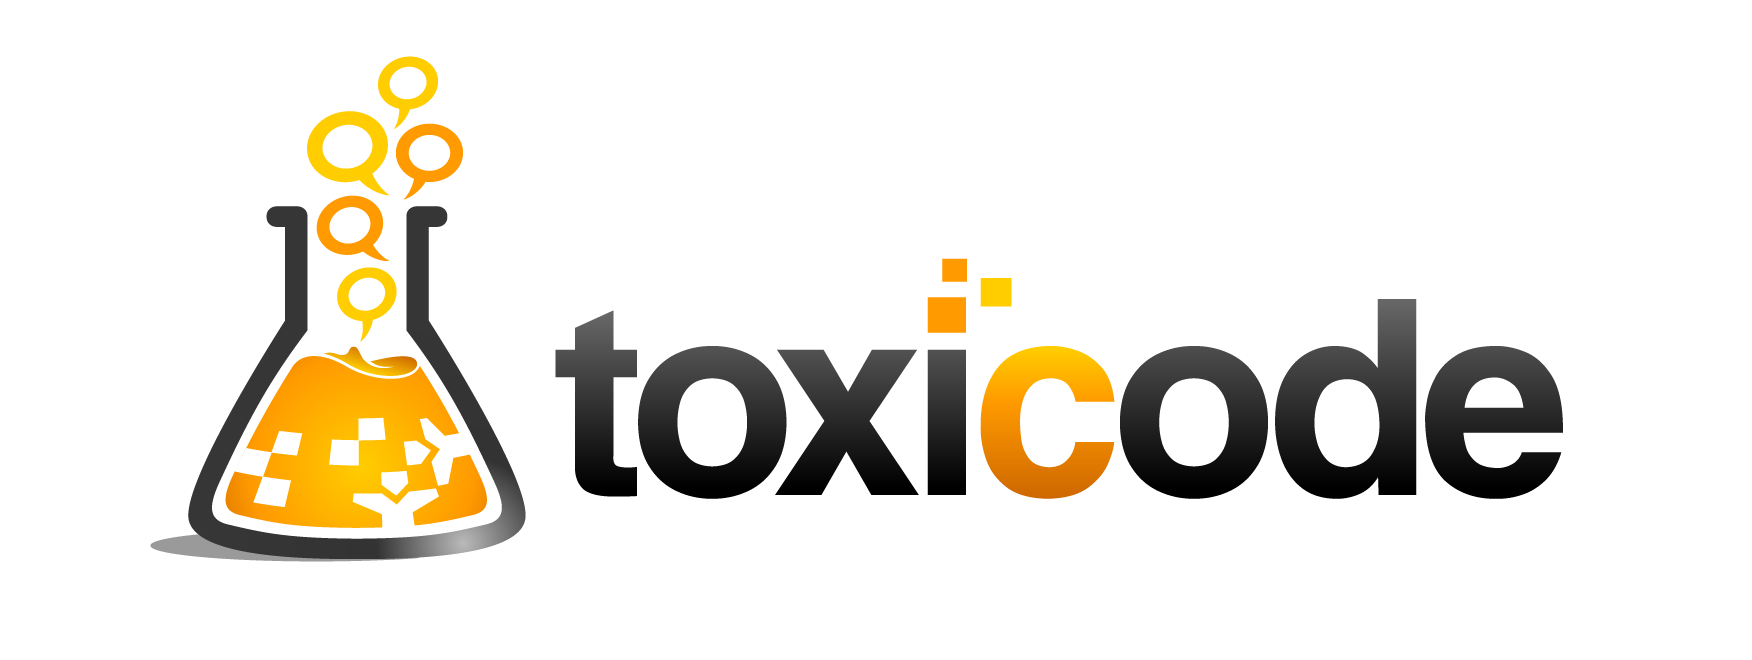 Toxicode logo 4x